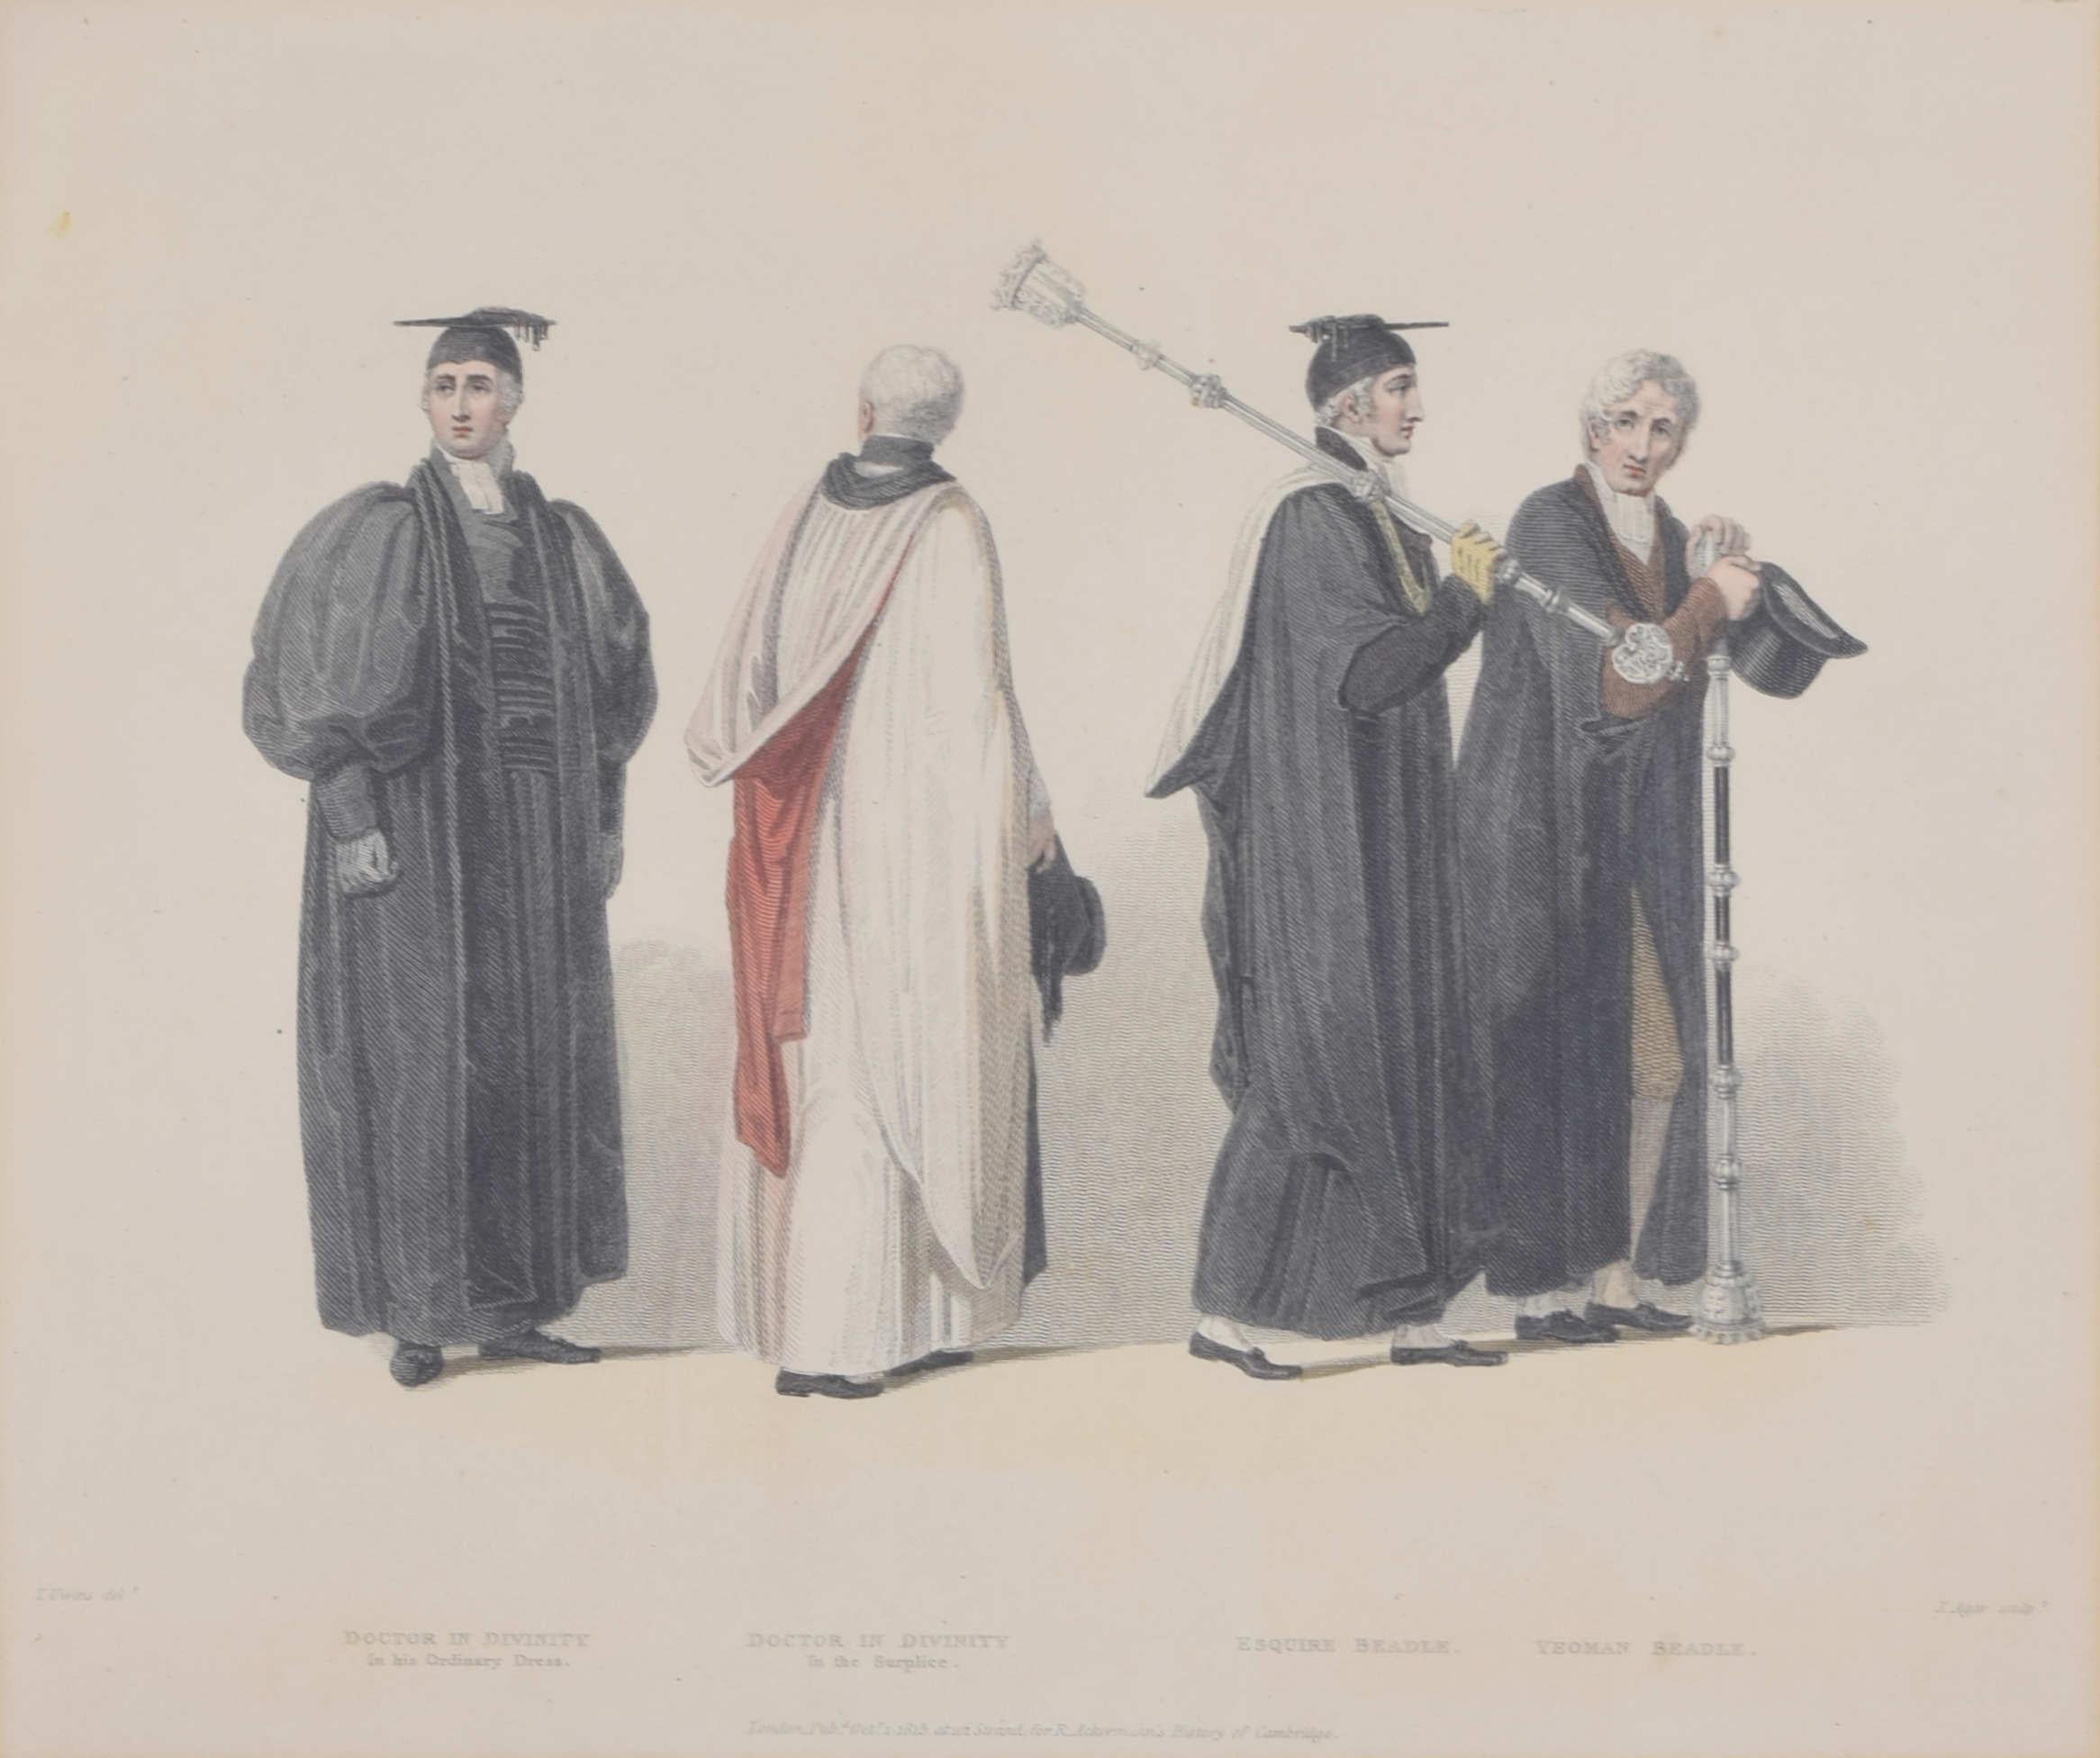 Doctors of Divinity, University of Cambridge 19th century engraving by John Agar - Print by Rudolph Ackermann